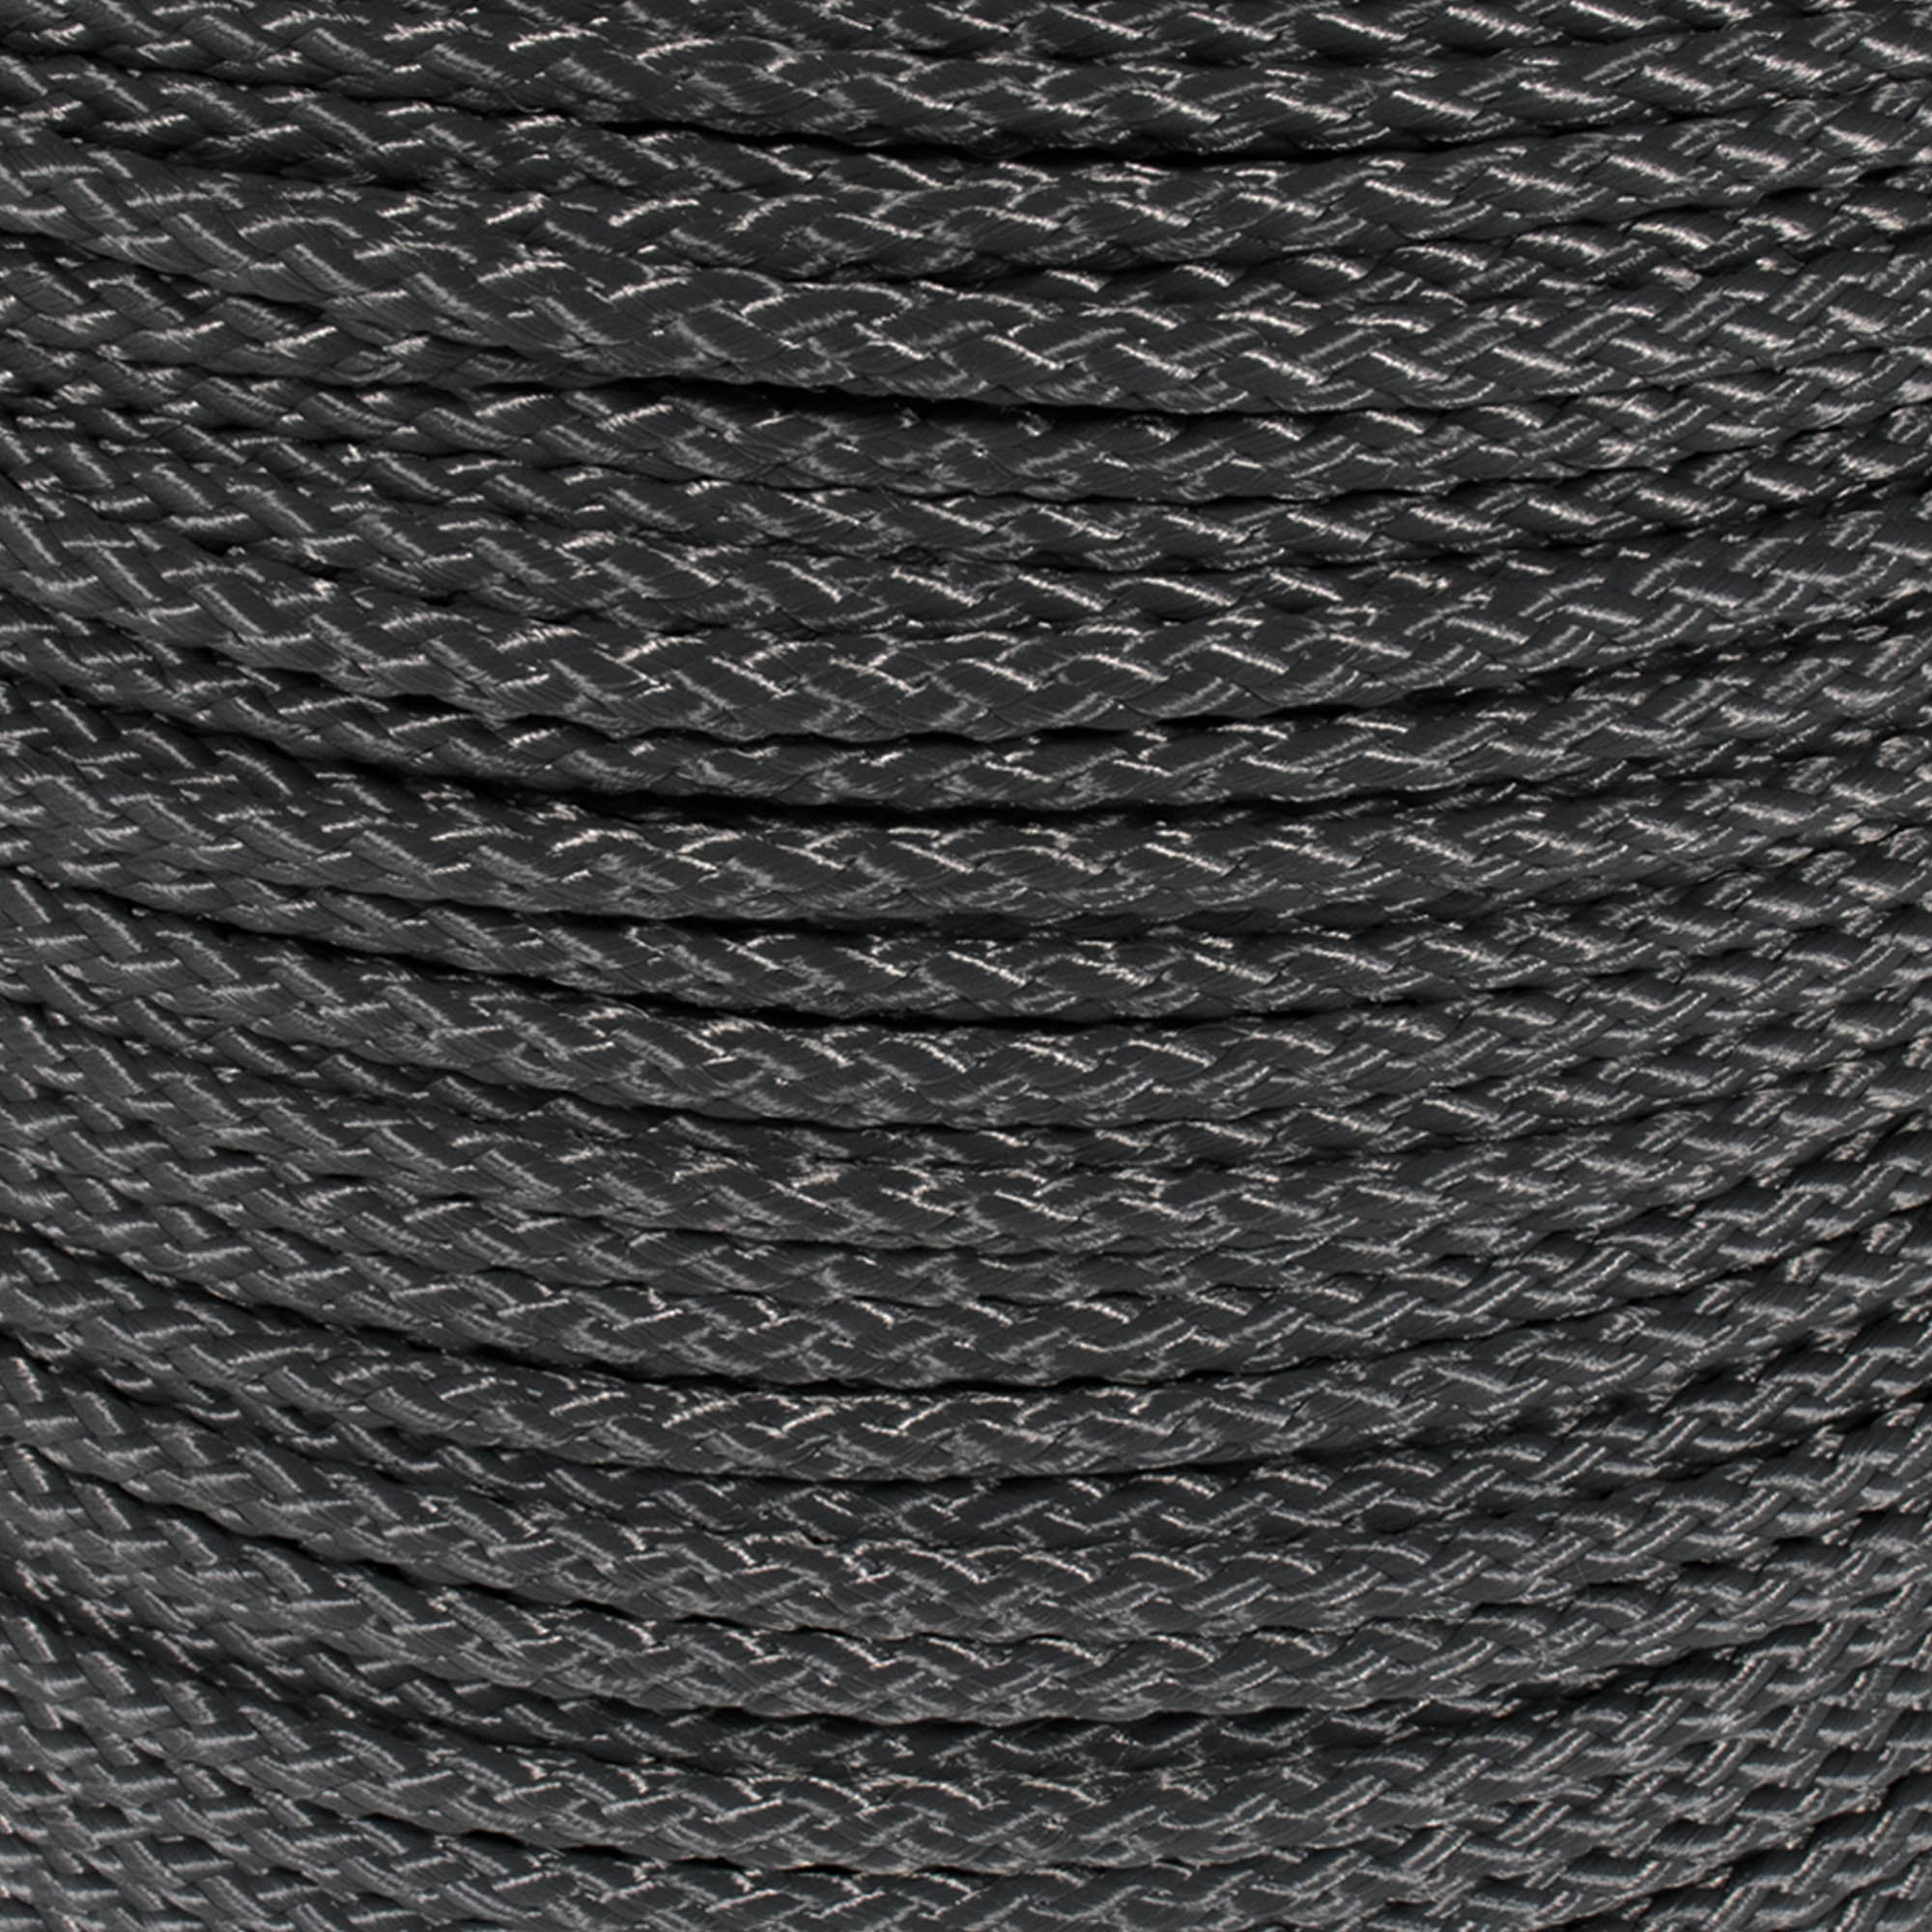 Golberg Diamond Braid Utility Nylon Rope - All-Purpose Rope - 1/8, 3/16,  1/4, 5/16, & 3/8 Diameters - Choose Color and Length from 10-1000 Feet 